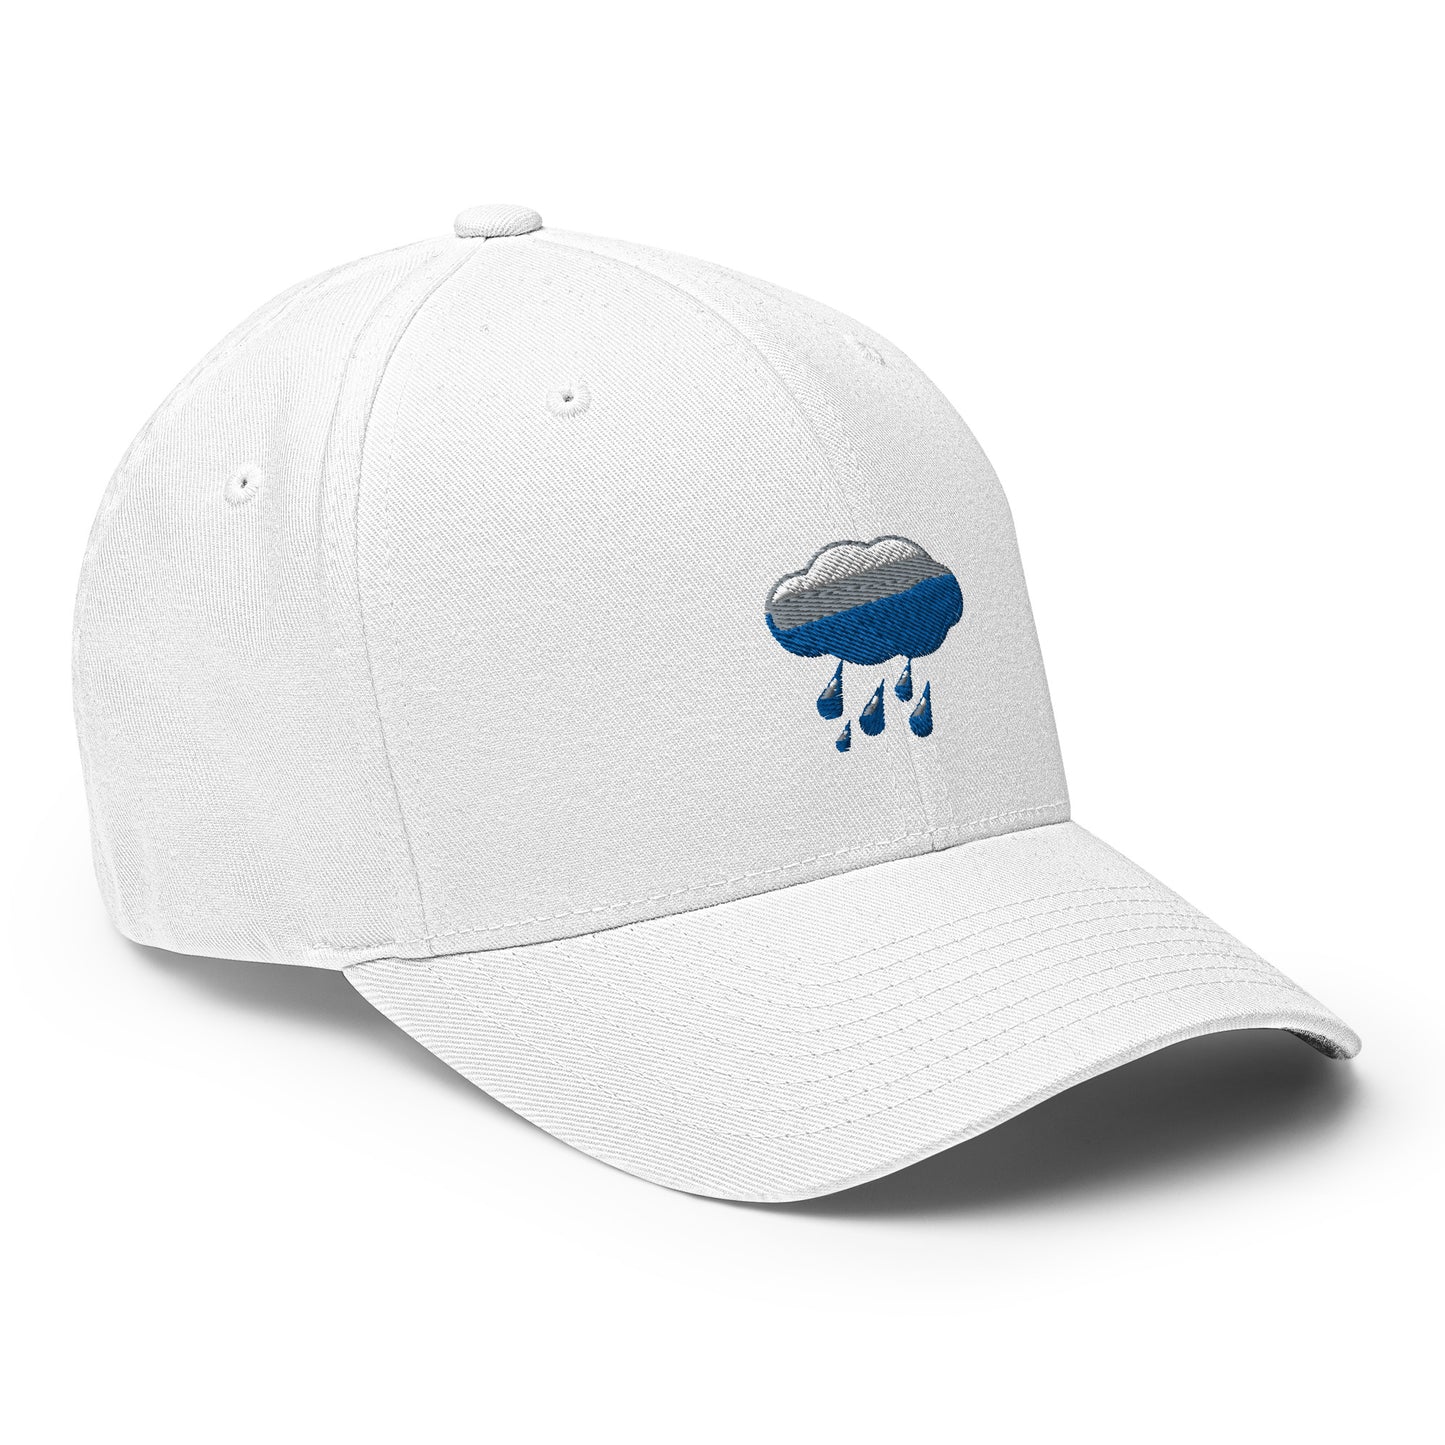 Baseball Cap with Rainy Cloud Symbol